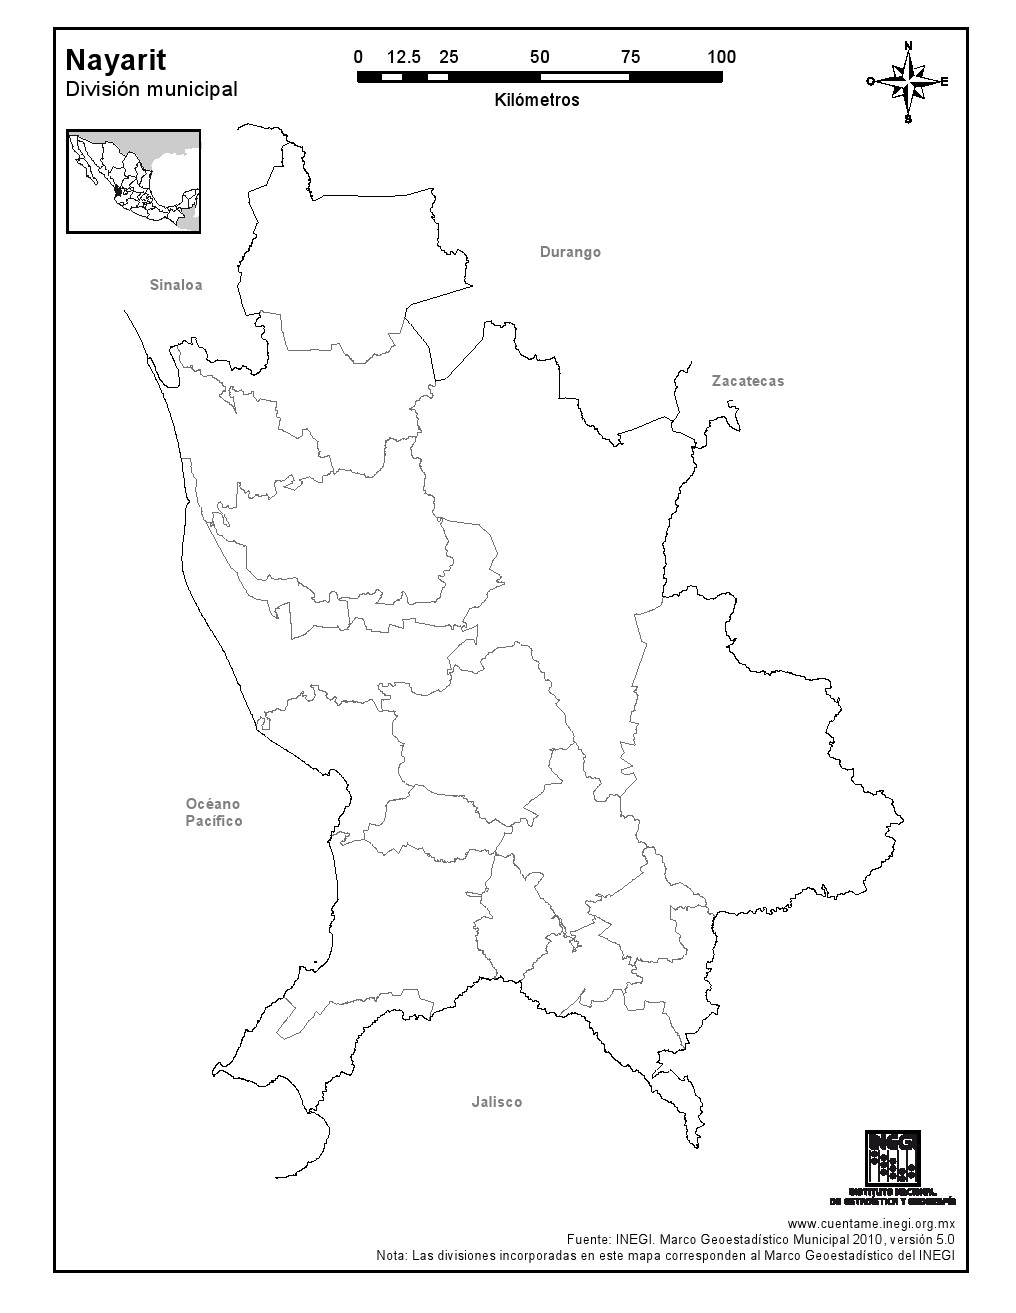 Mapa mudo de municipios de Nayarit. INEGI de México